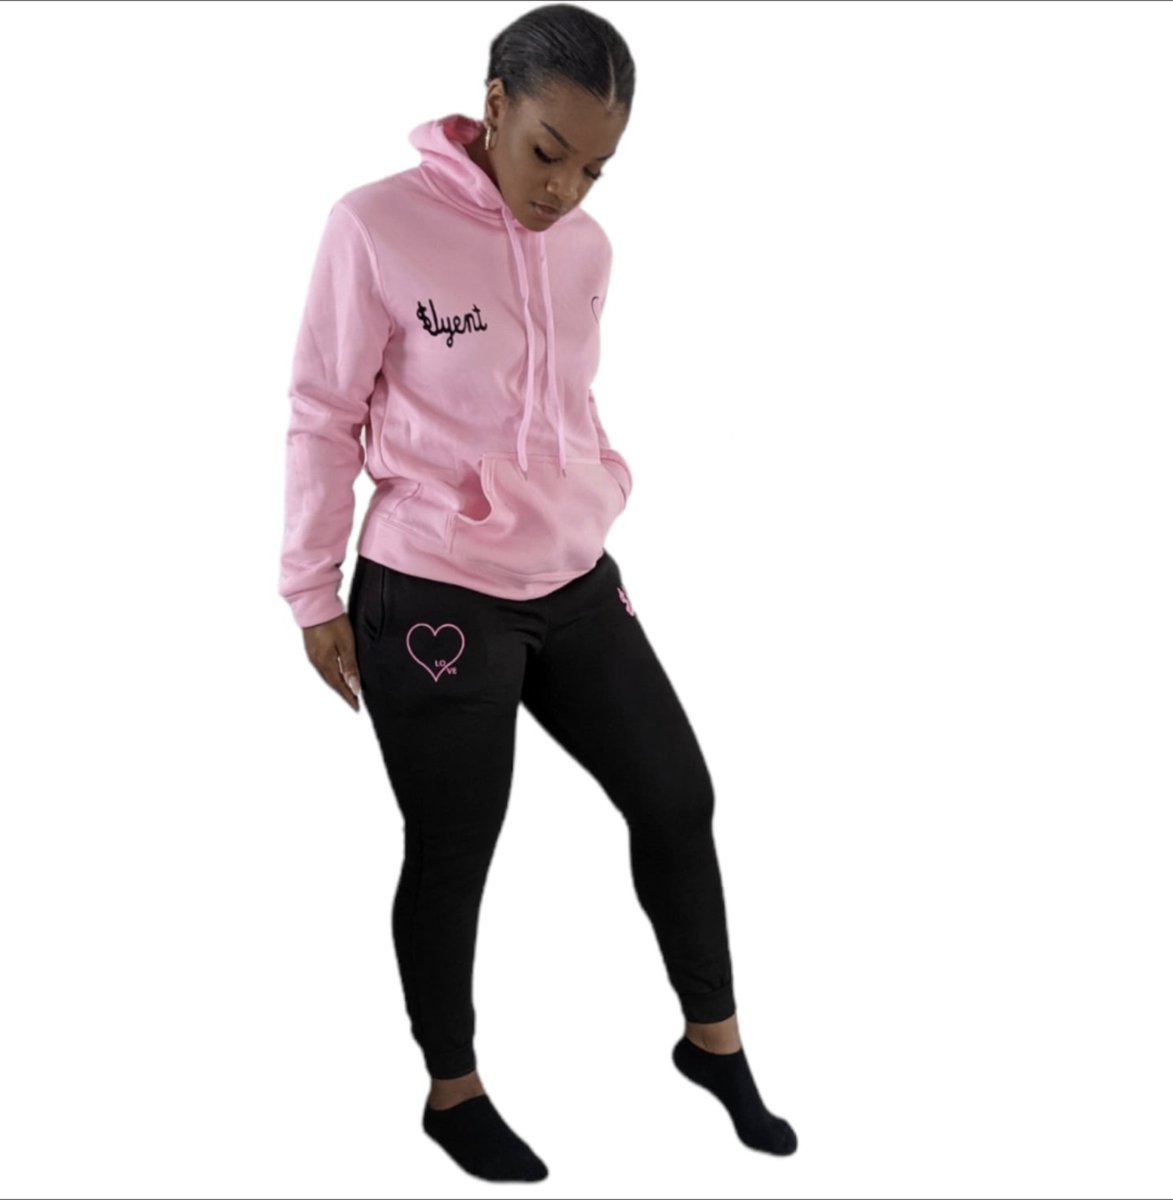 Svyent joggingpak light pink top / broek black & logo love kleding maat S